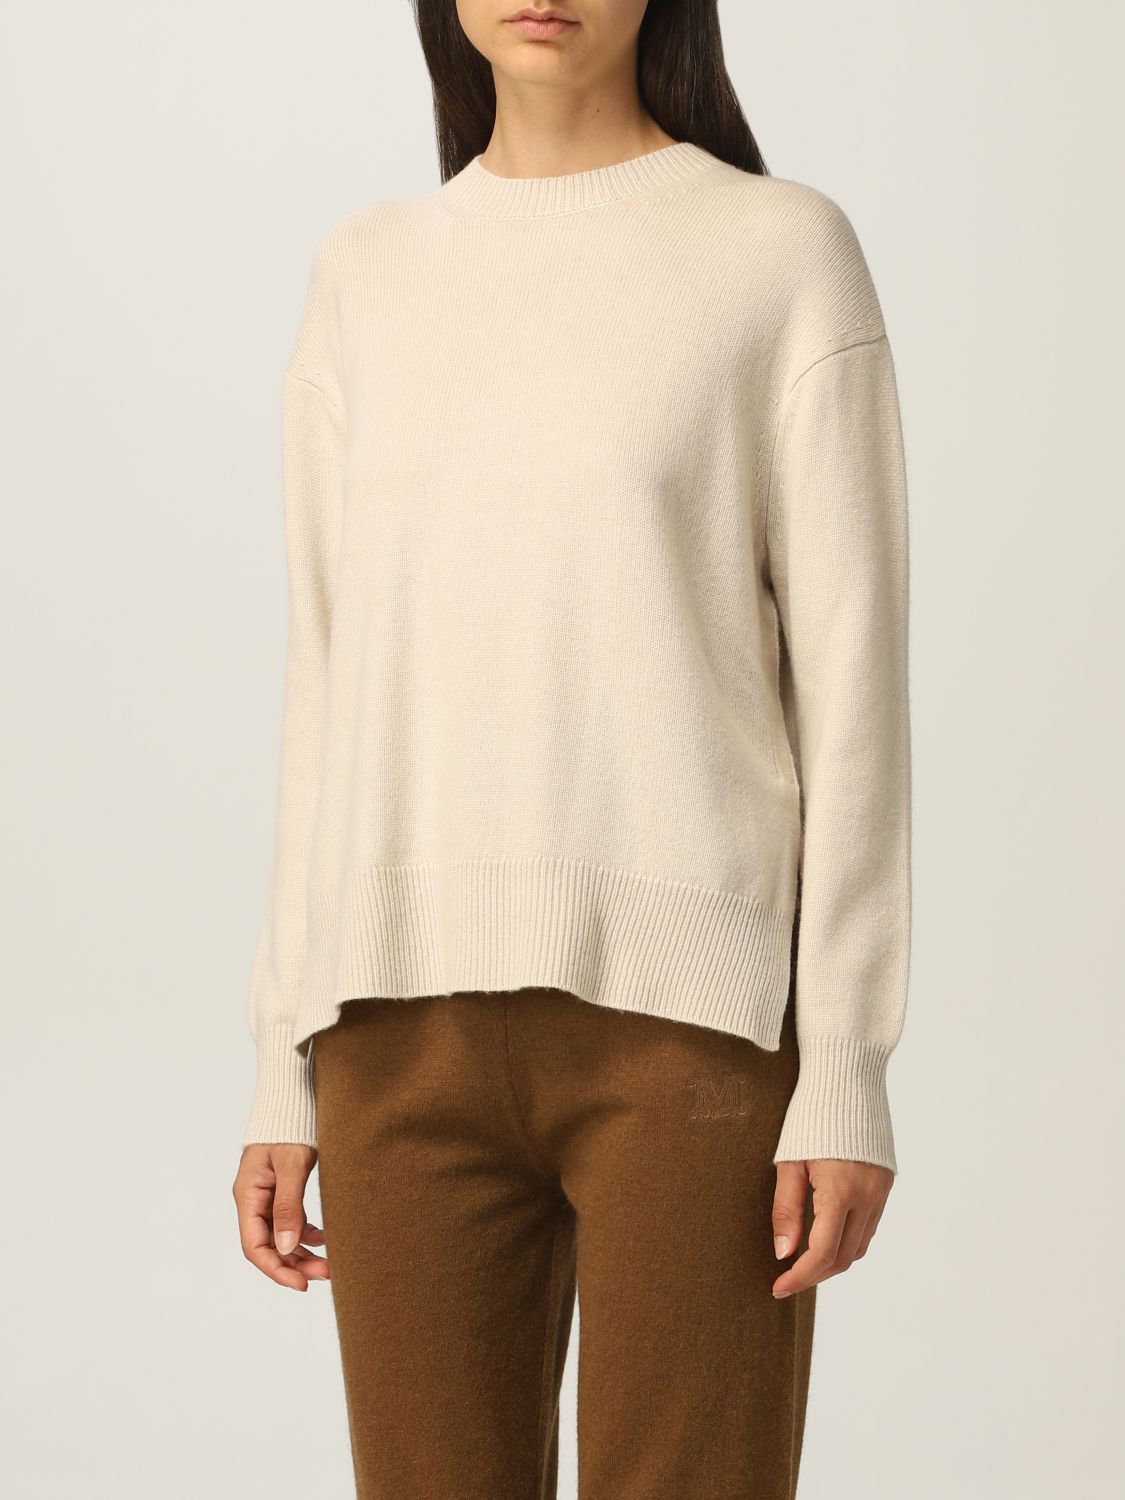 S MAX MARA: cashmere sweater - White | S Max Mara sweater 93661313600 ...